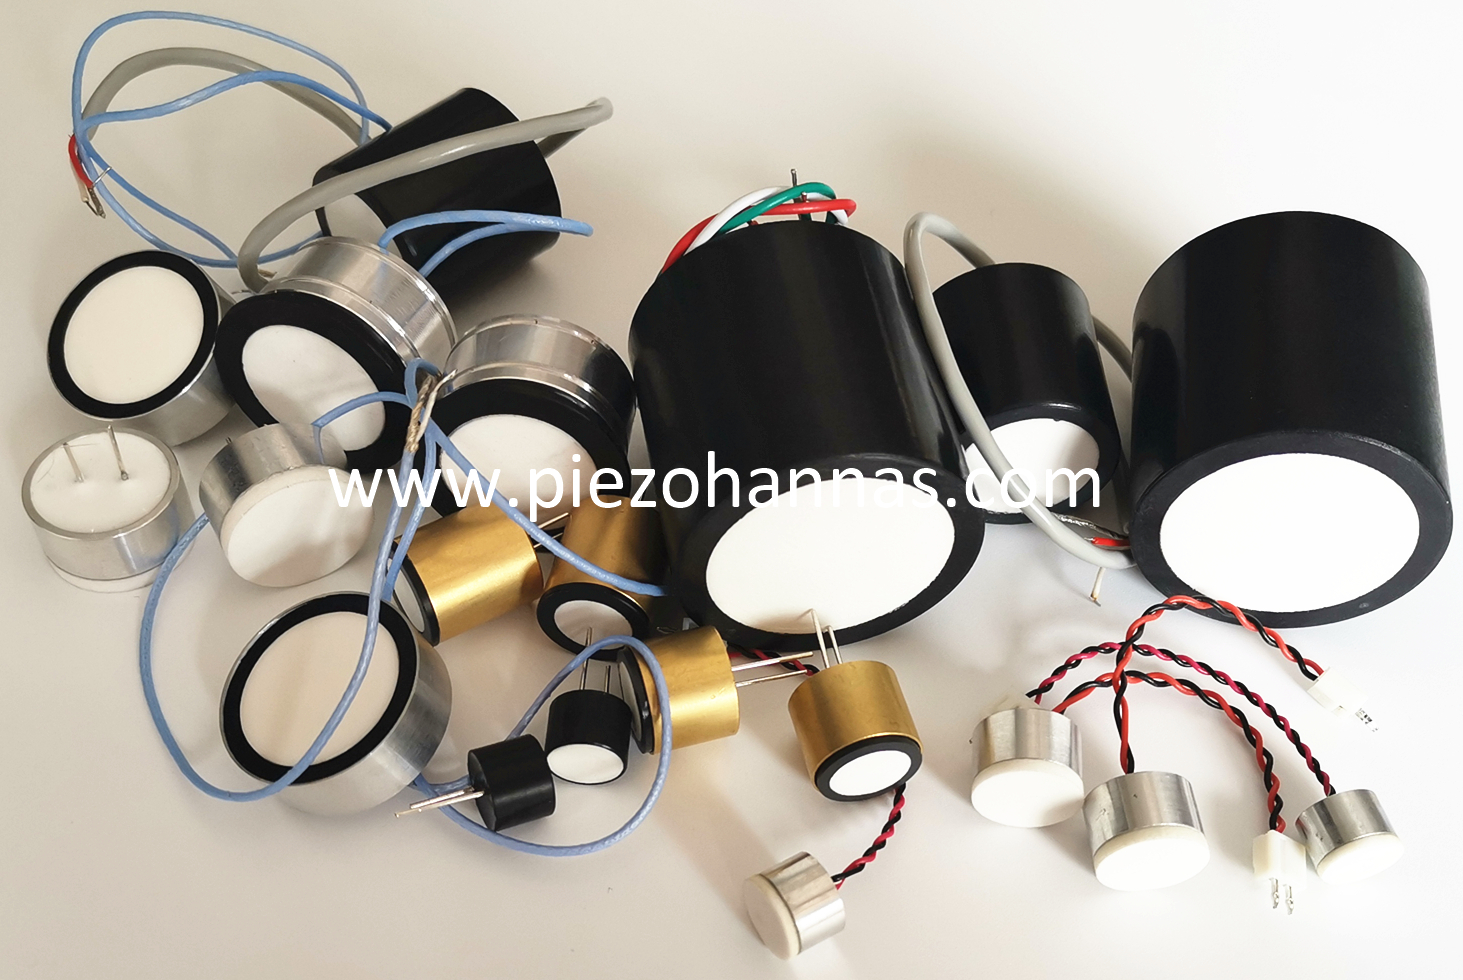 230KHz Ultrasonic Range Transducer Piezoelectric Transducer for Proximity Sensor